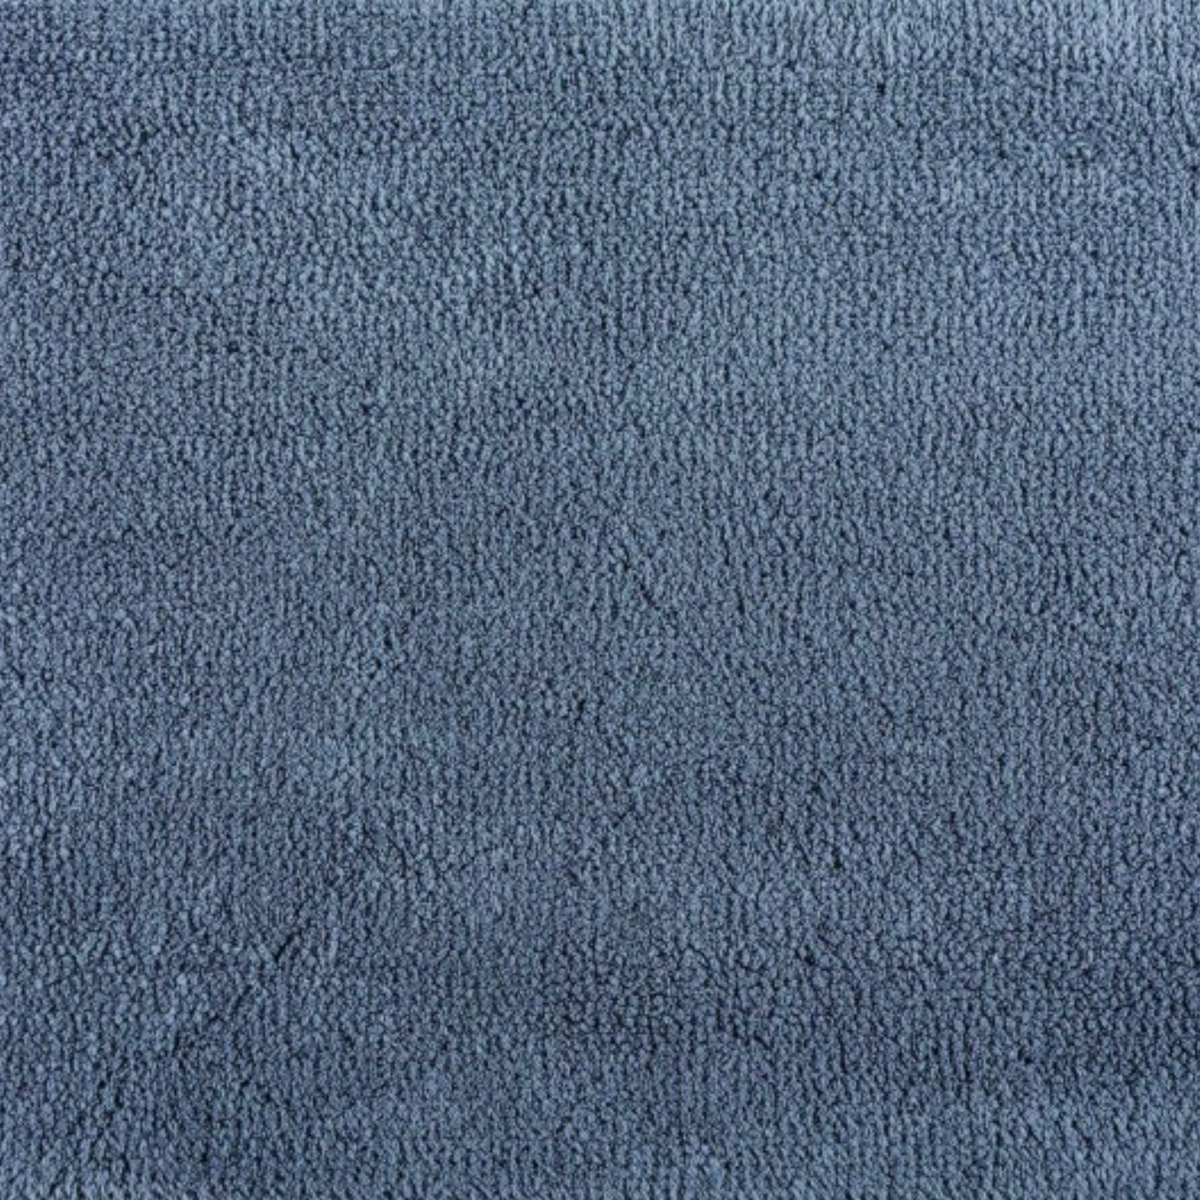 Fabric Closeup of Graccioza Cool Bath Rugs Cobalt Color